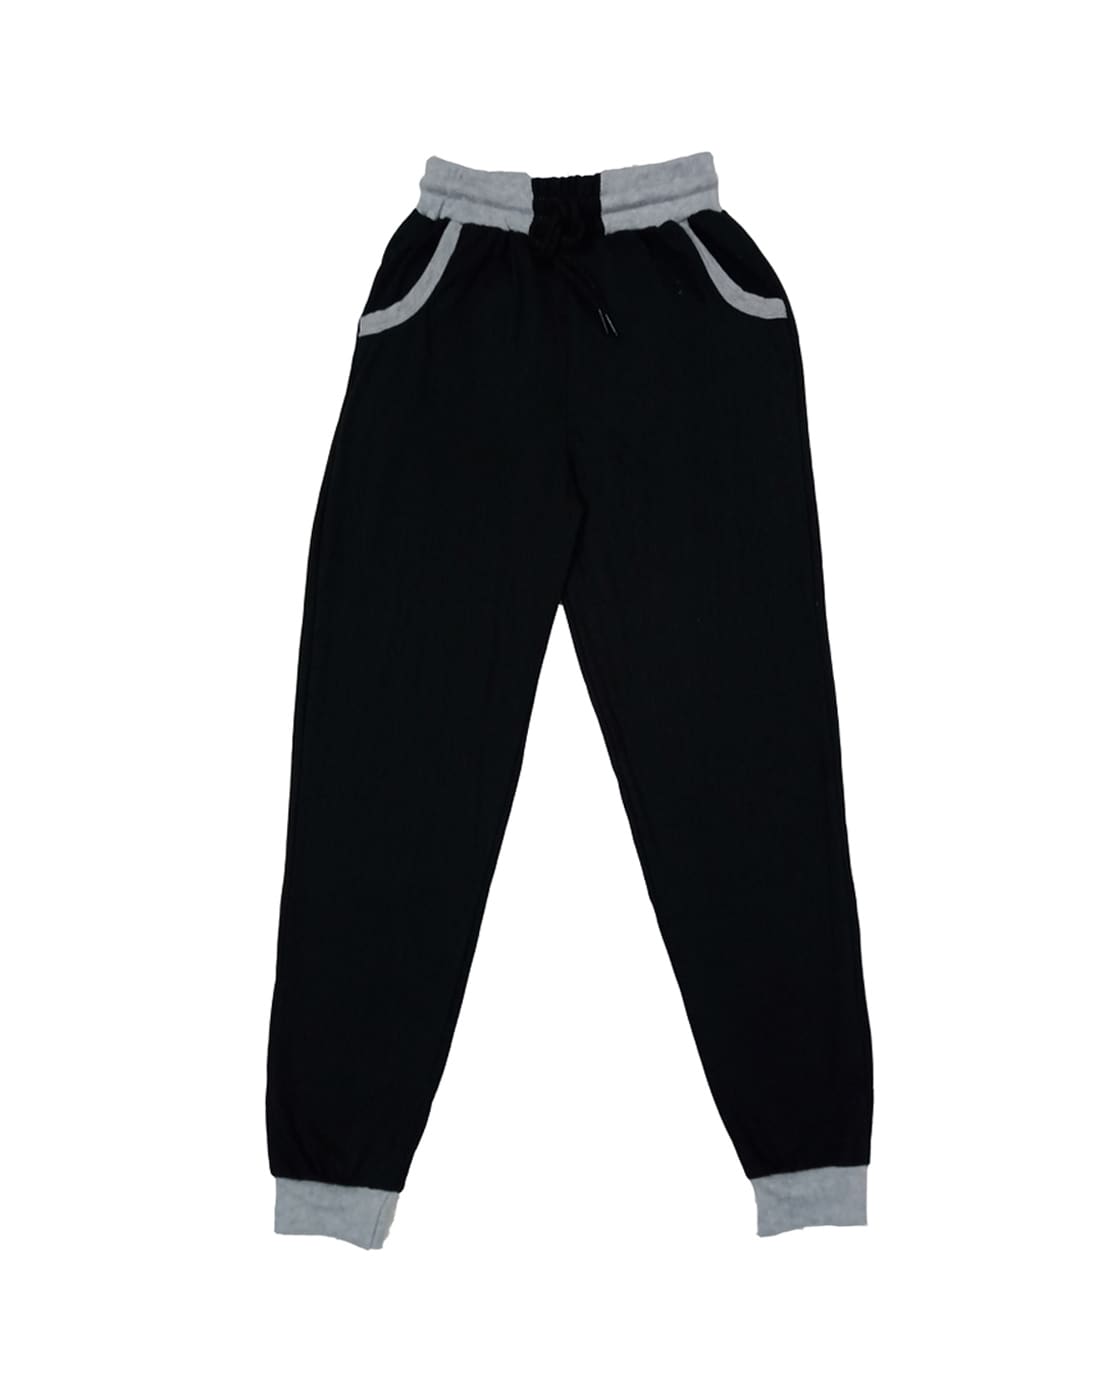 Buy Now,TeenTrums Girls Track pants - half on half pattern- Peach & White